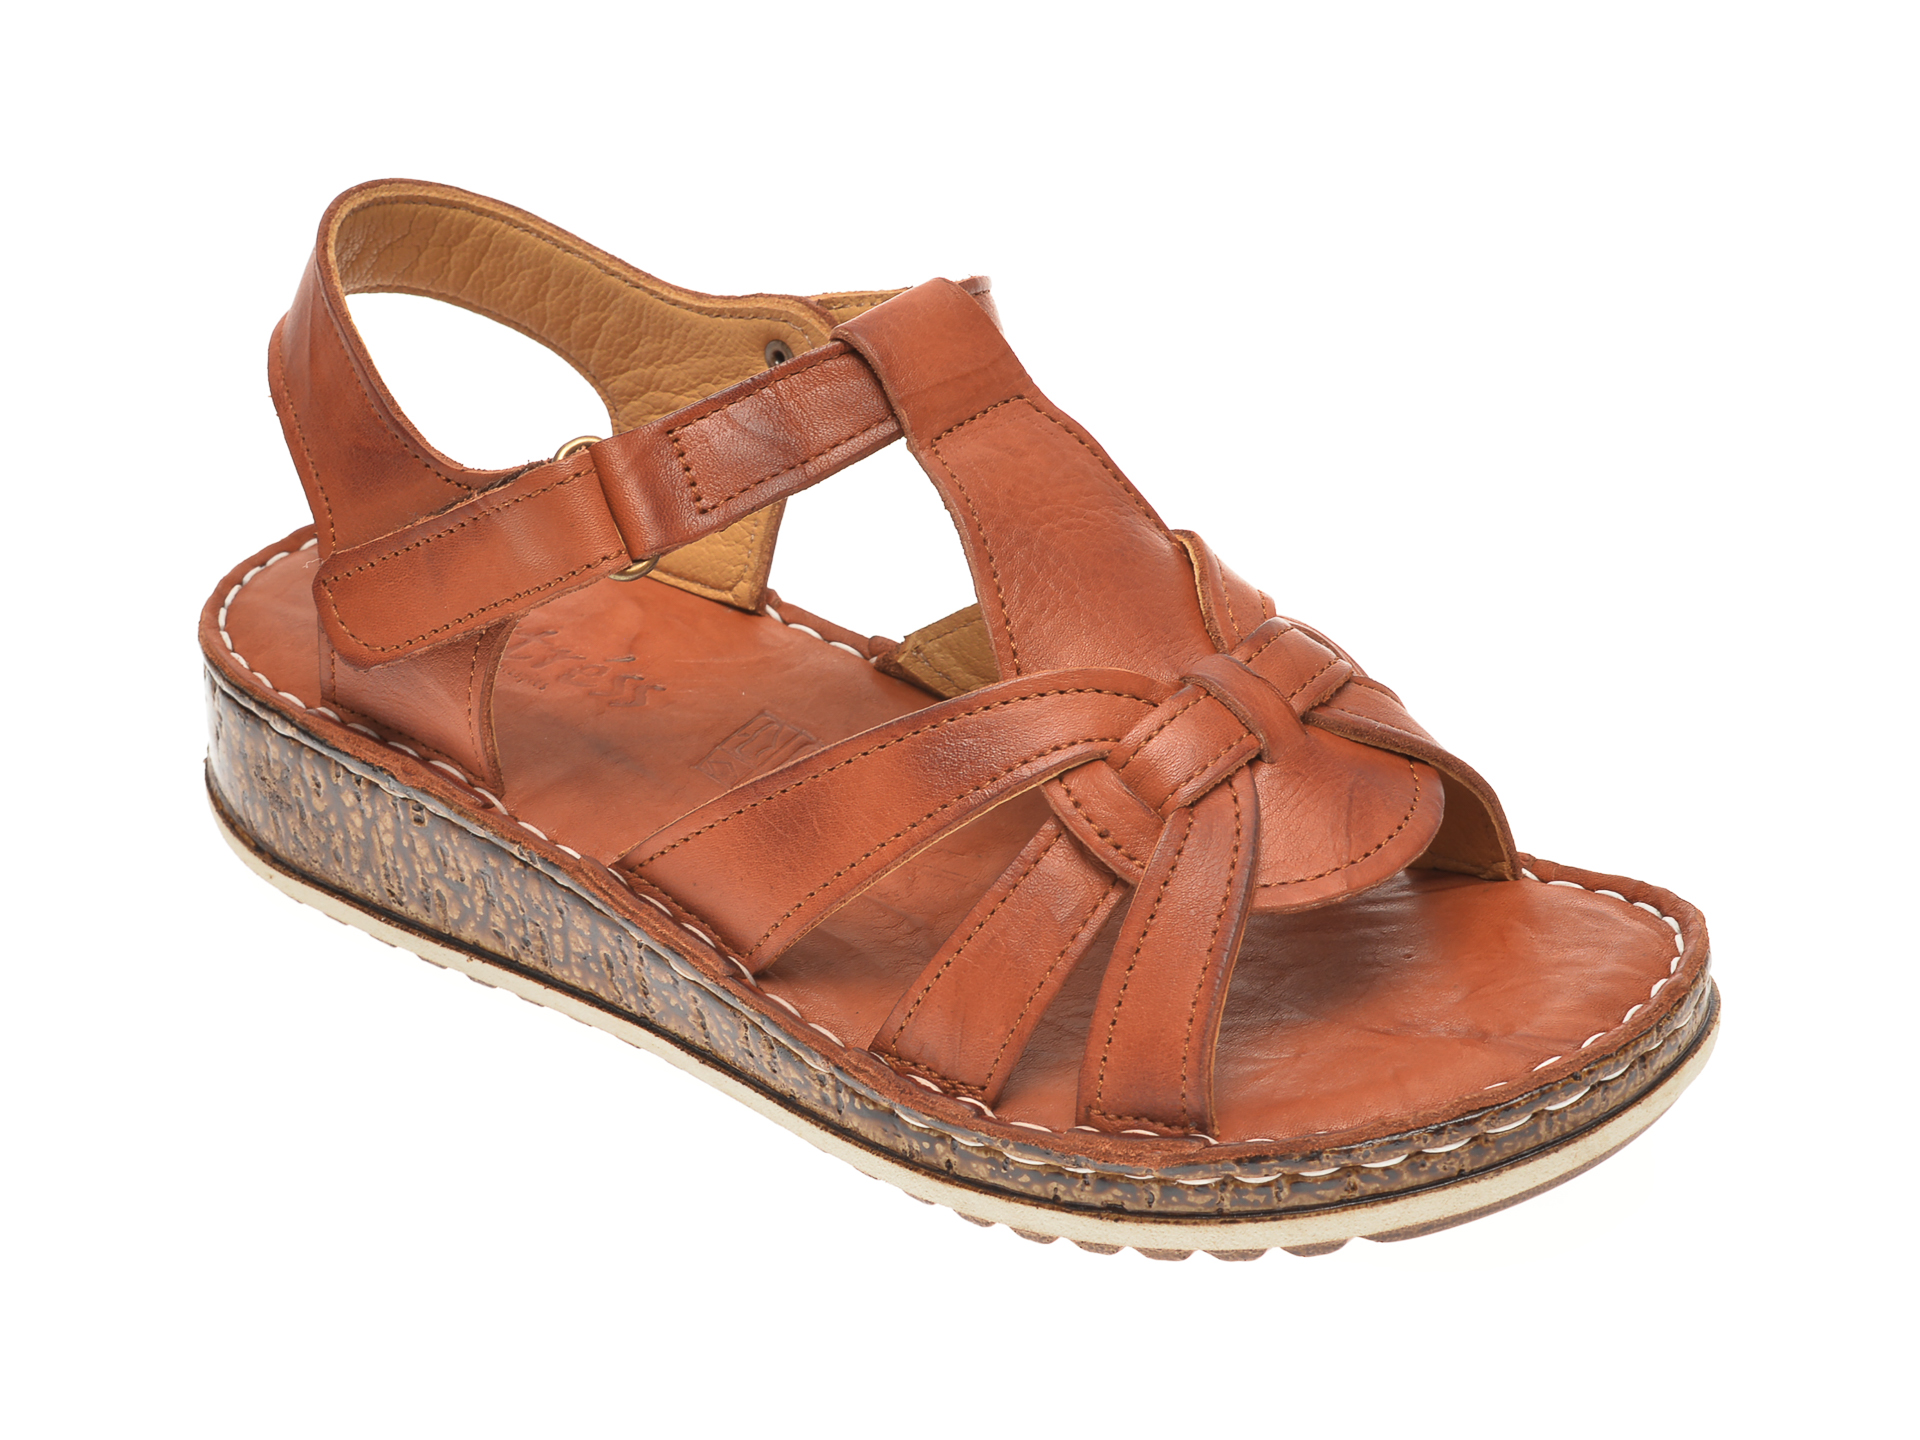 Sandale SINESTRESS maro, 1370, din piele naturala